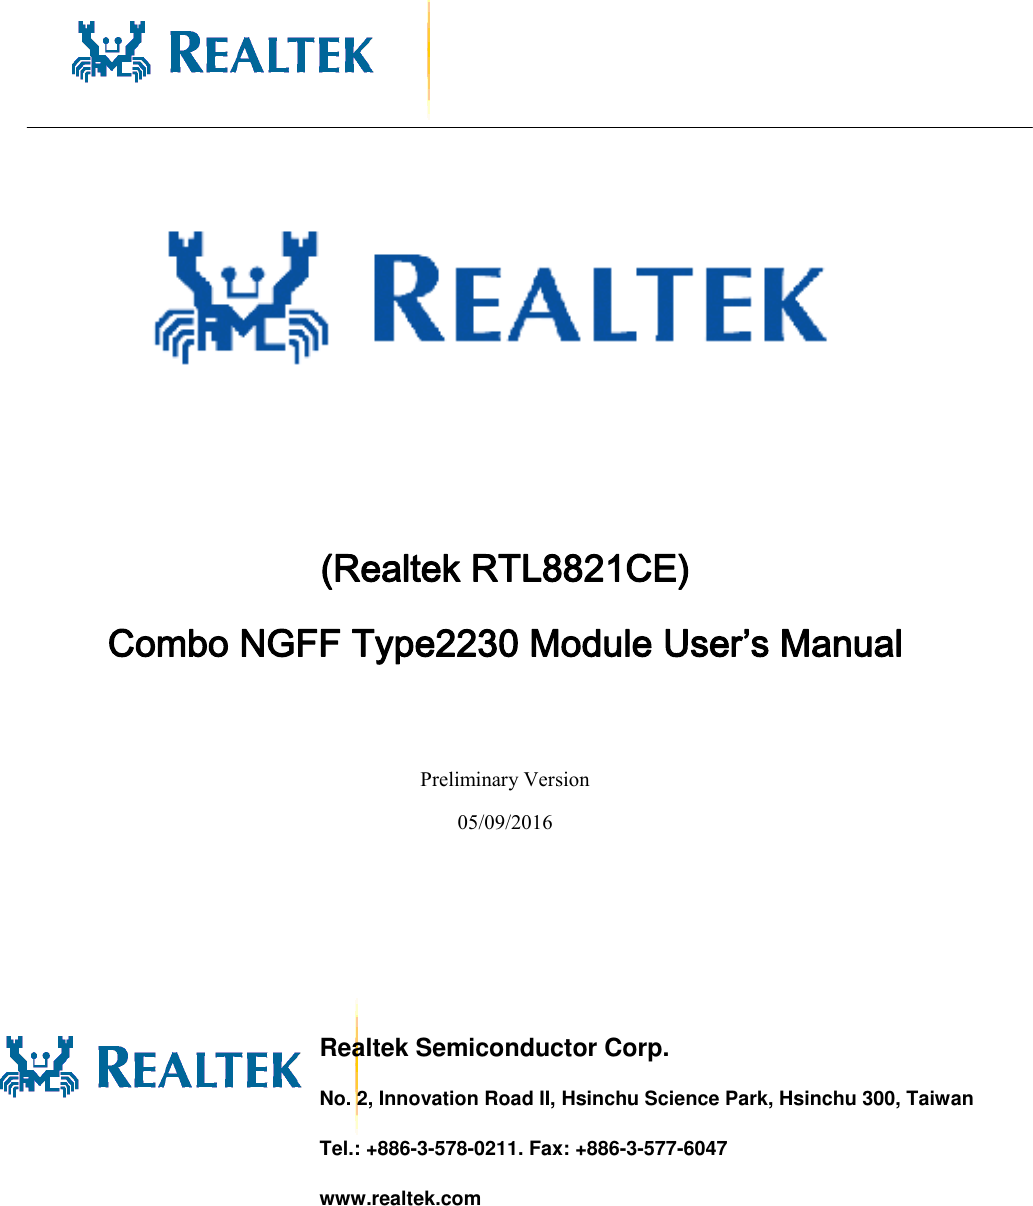                                                  (Realtek RTL8821CE)   Combo NGFF Type2230 Module User’s Manual  Preliminary Version 05/09/2016      Realtek Semiconductor Corp. No. 2, Innovation Road II, Hsinchu Science Park, Hsinchu 300, Taiwan Tel.: +886-3-578-0211. Fax: +886-3-577-6047 www.realtek.com  